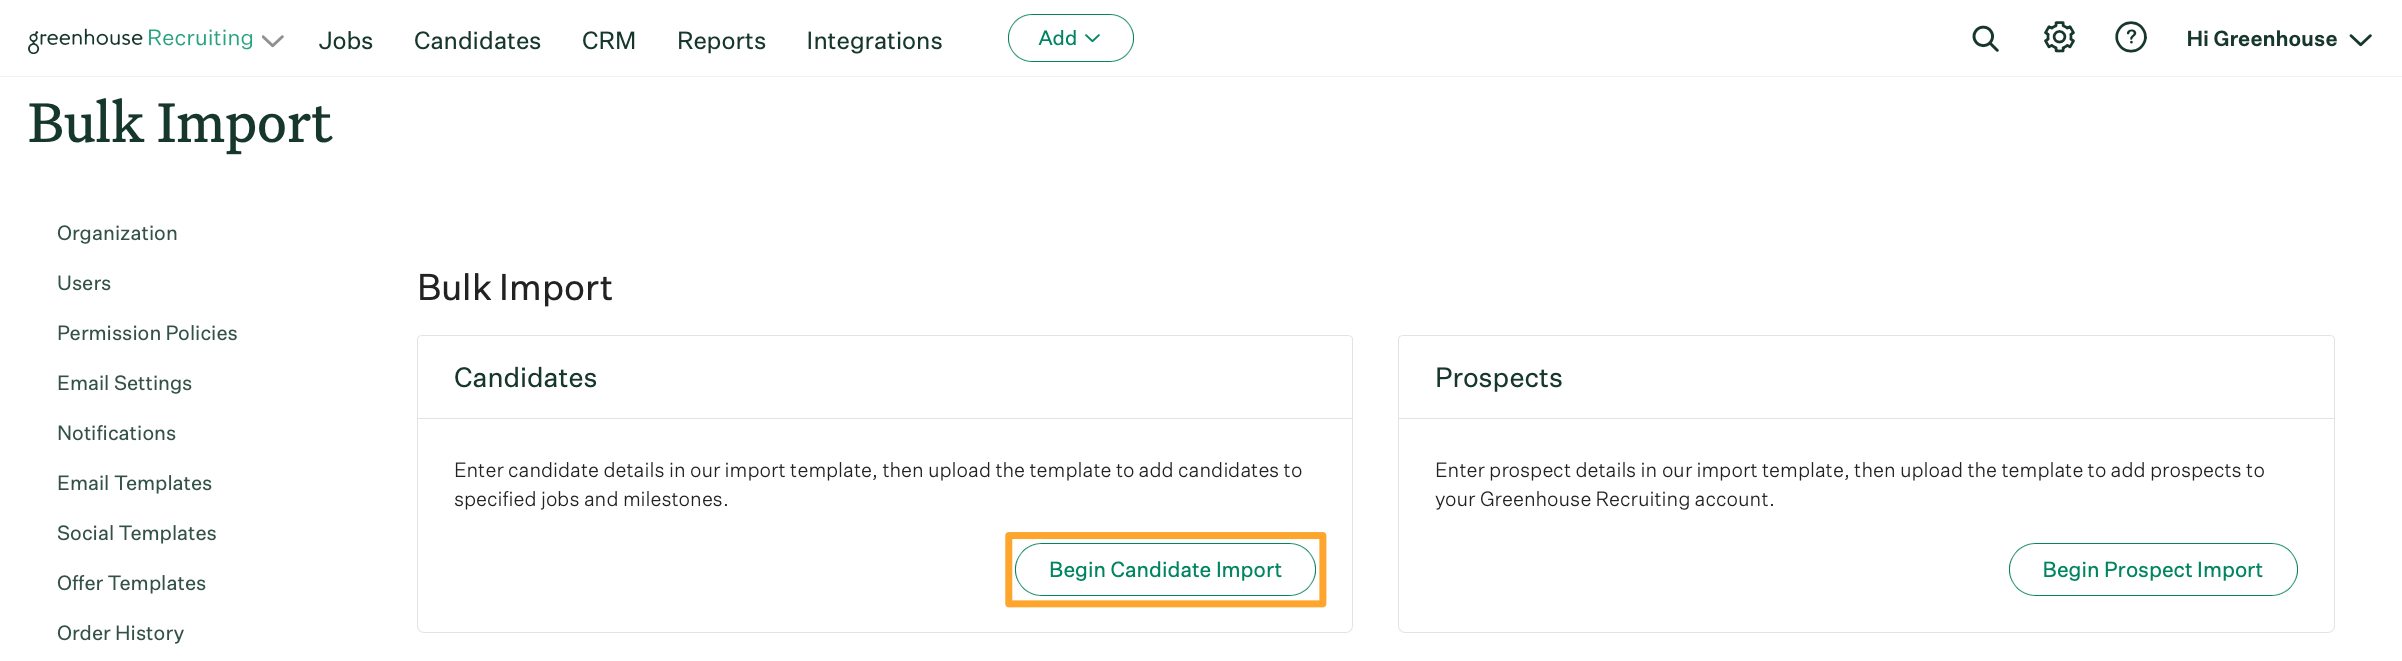 Screenshot of begin candidate import button